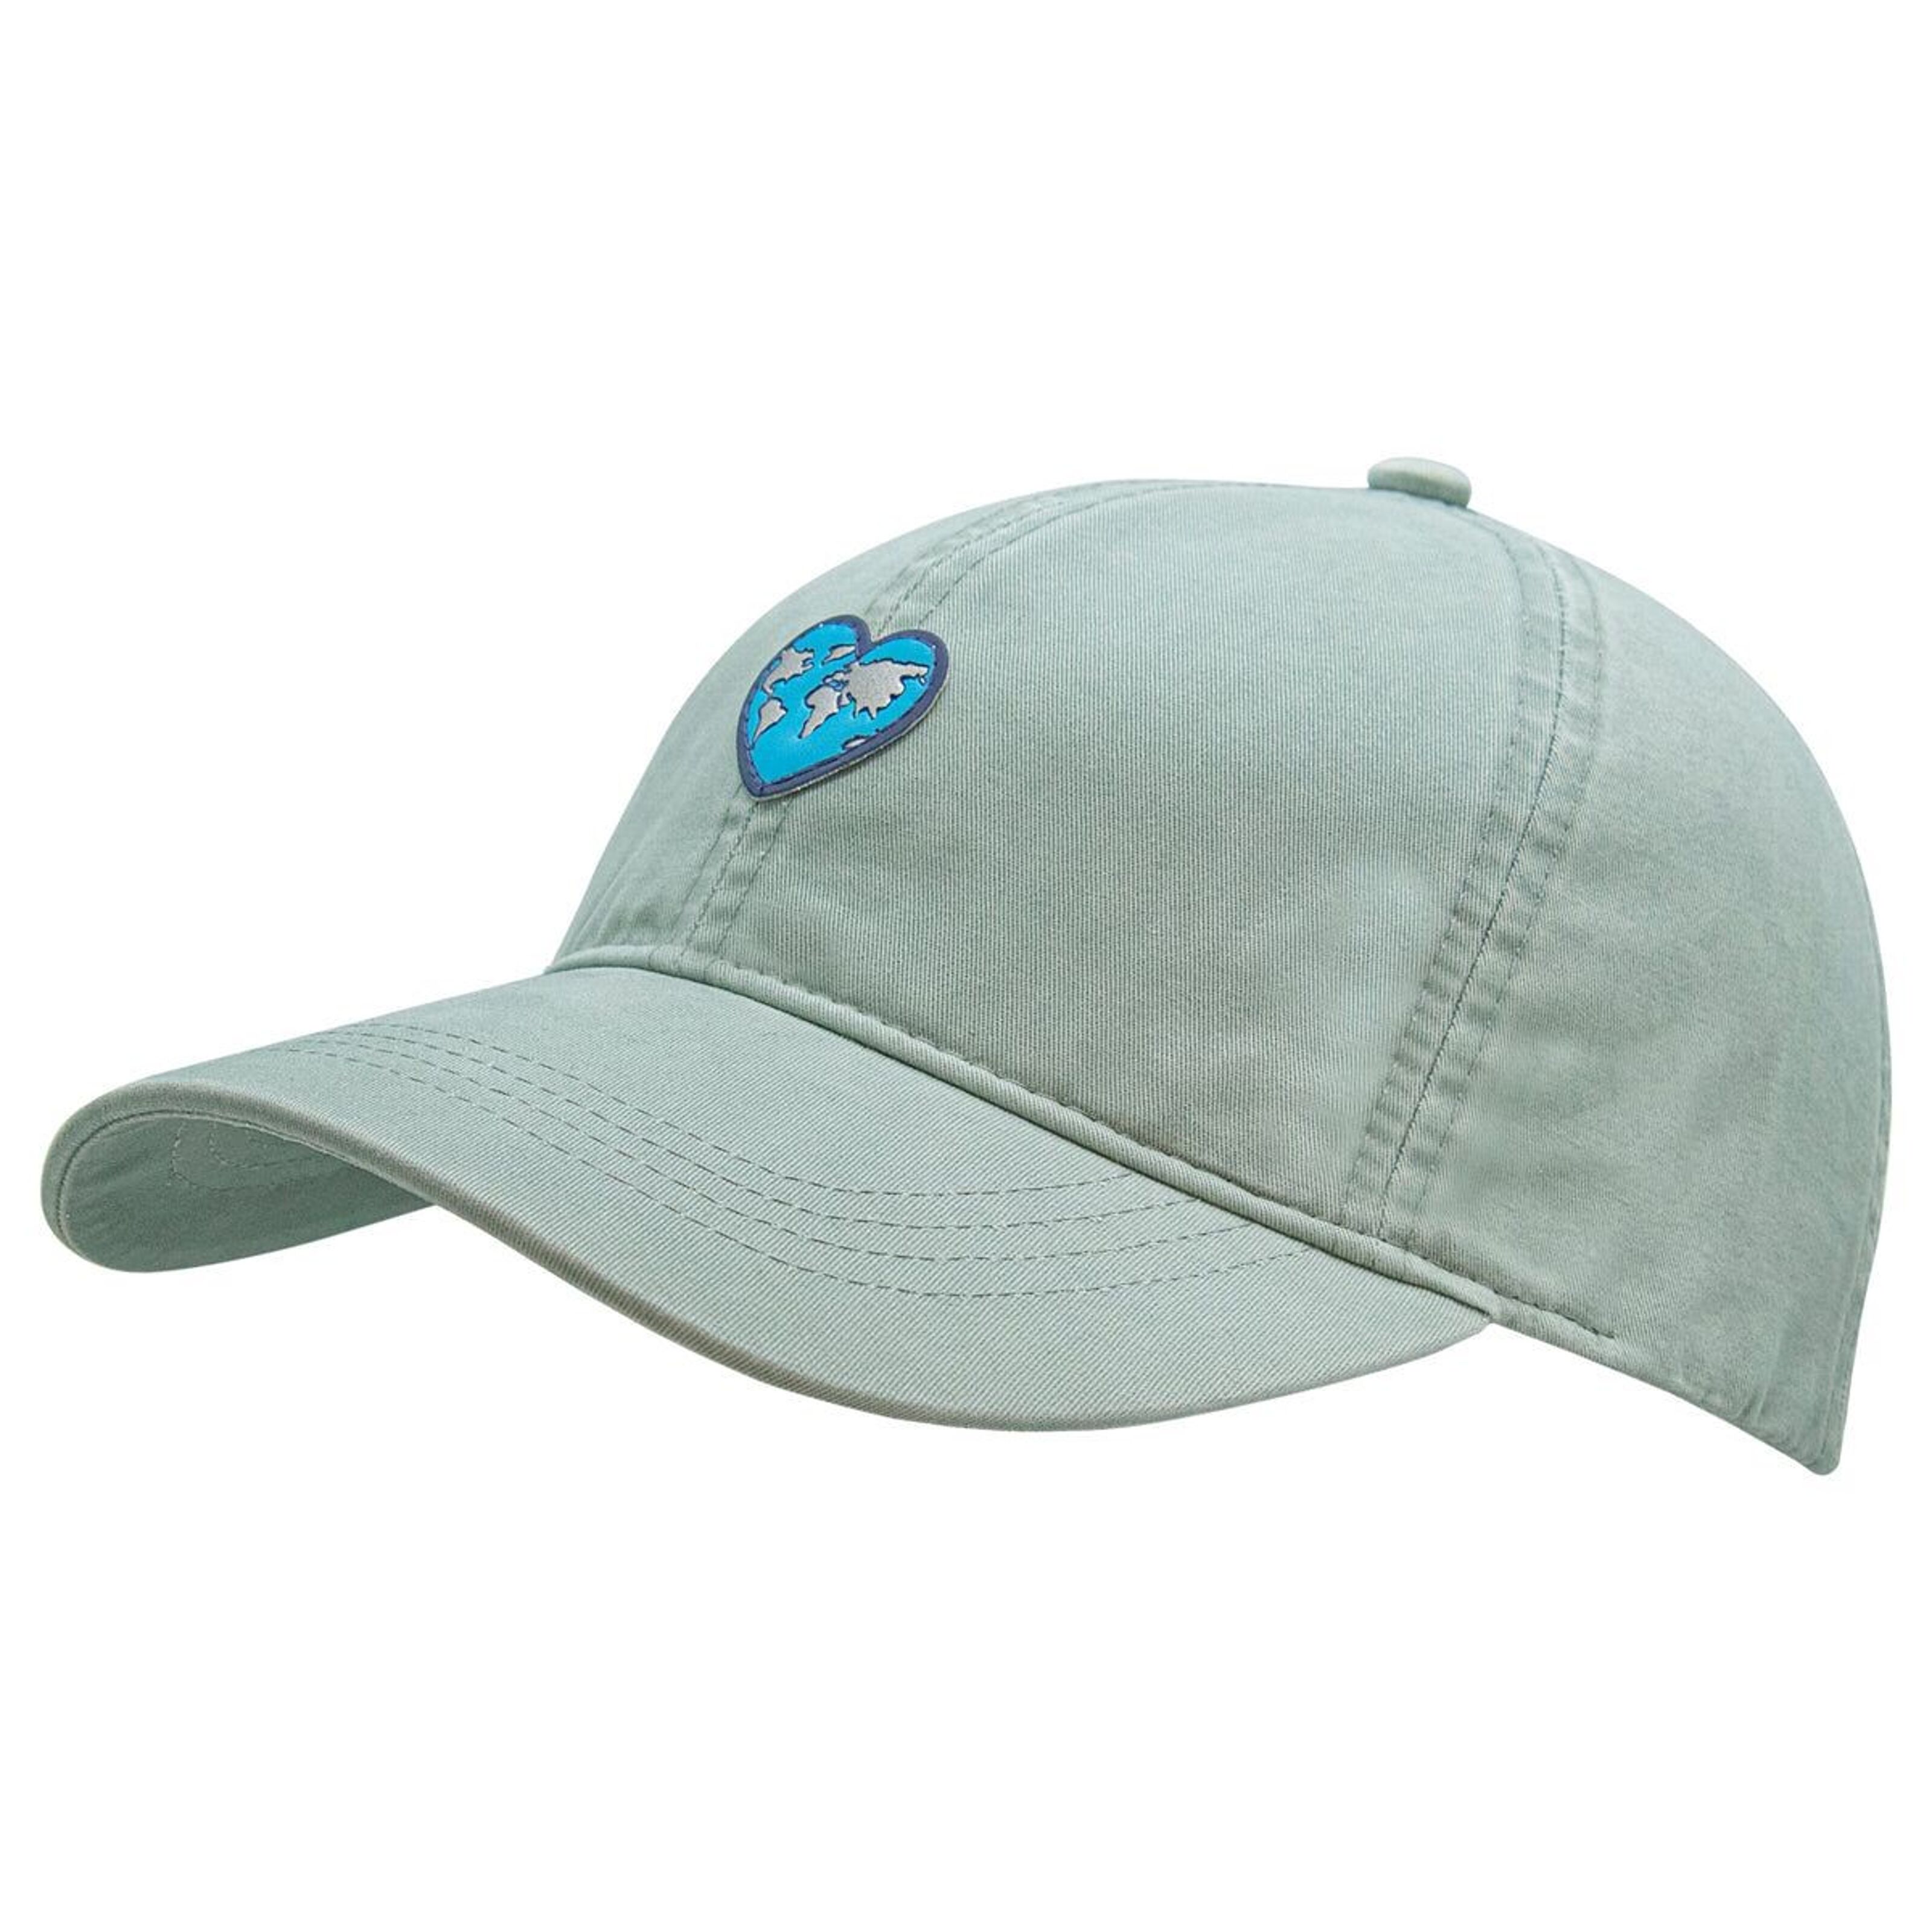 Buy baseball cap Hat wholesale Veracruz